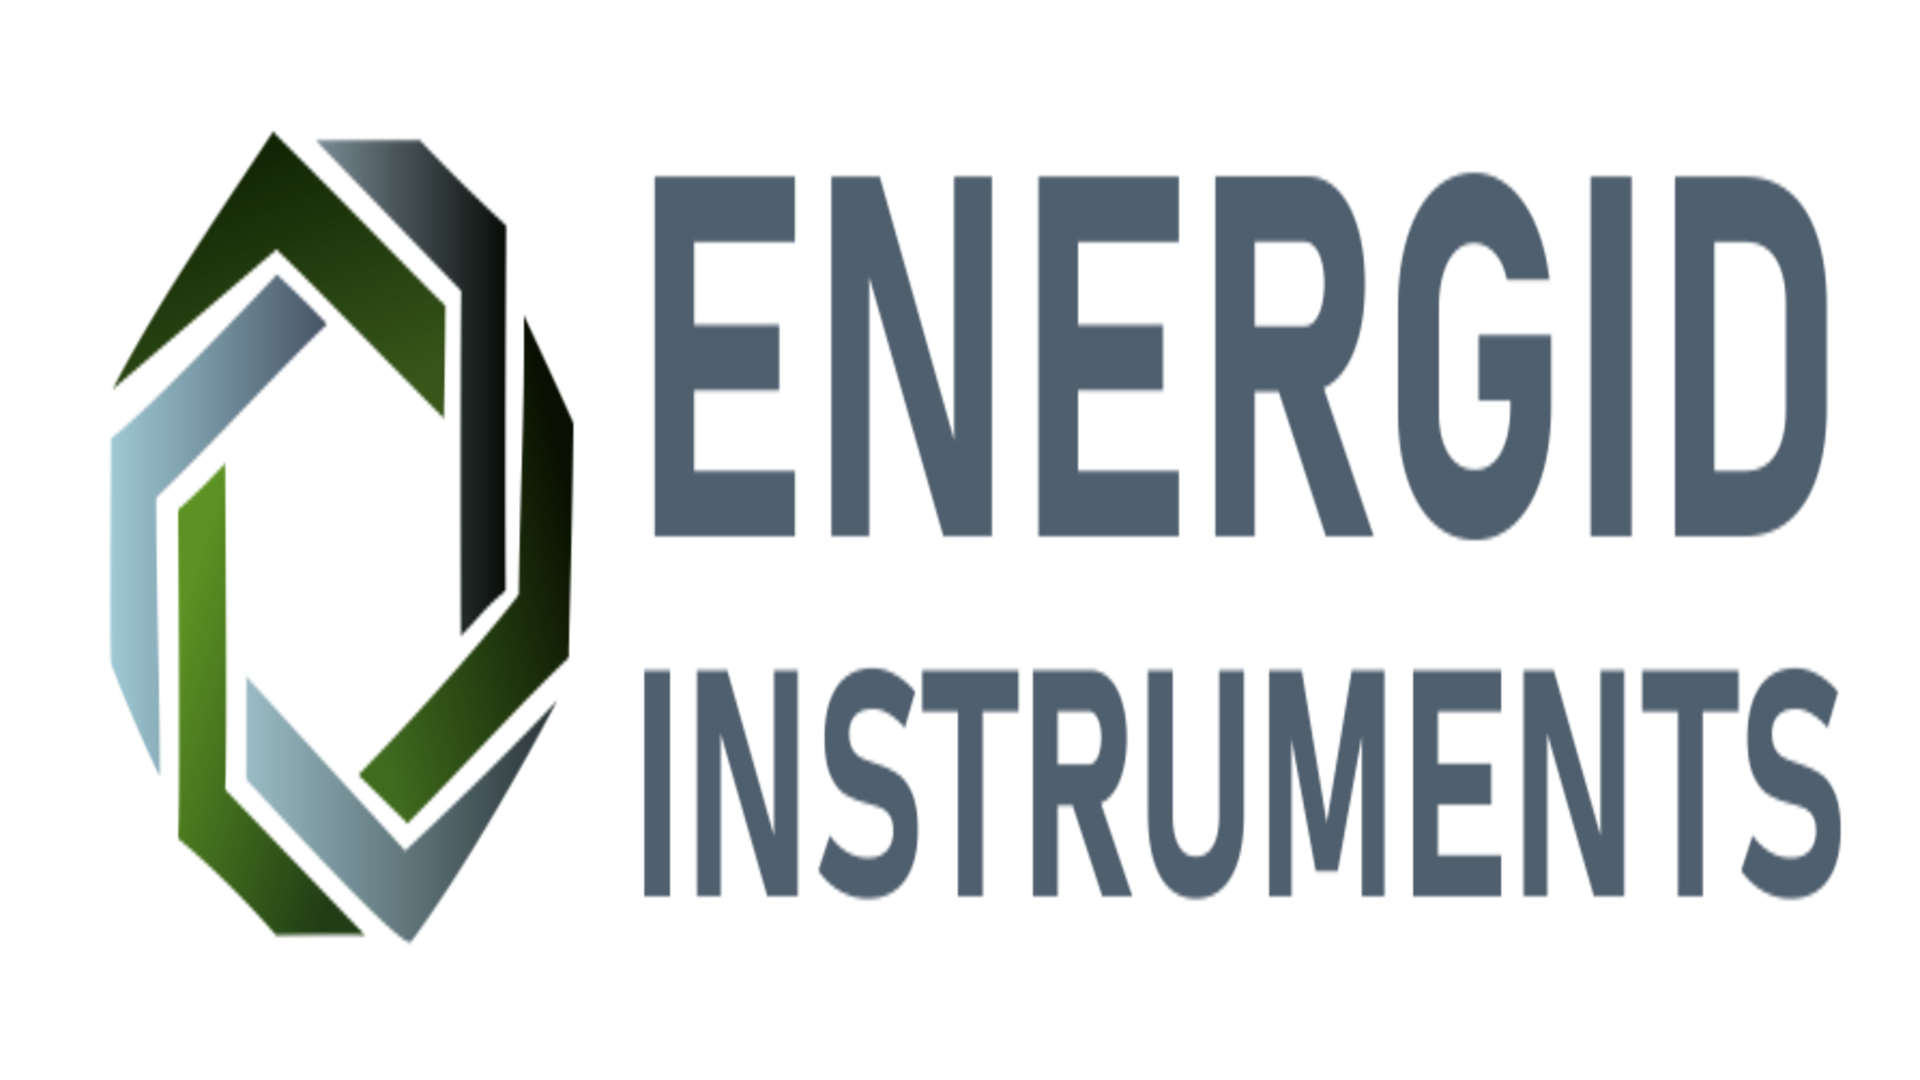 Energid Instruments